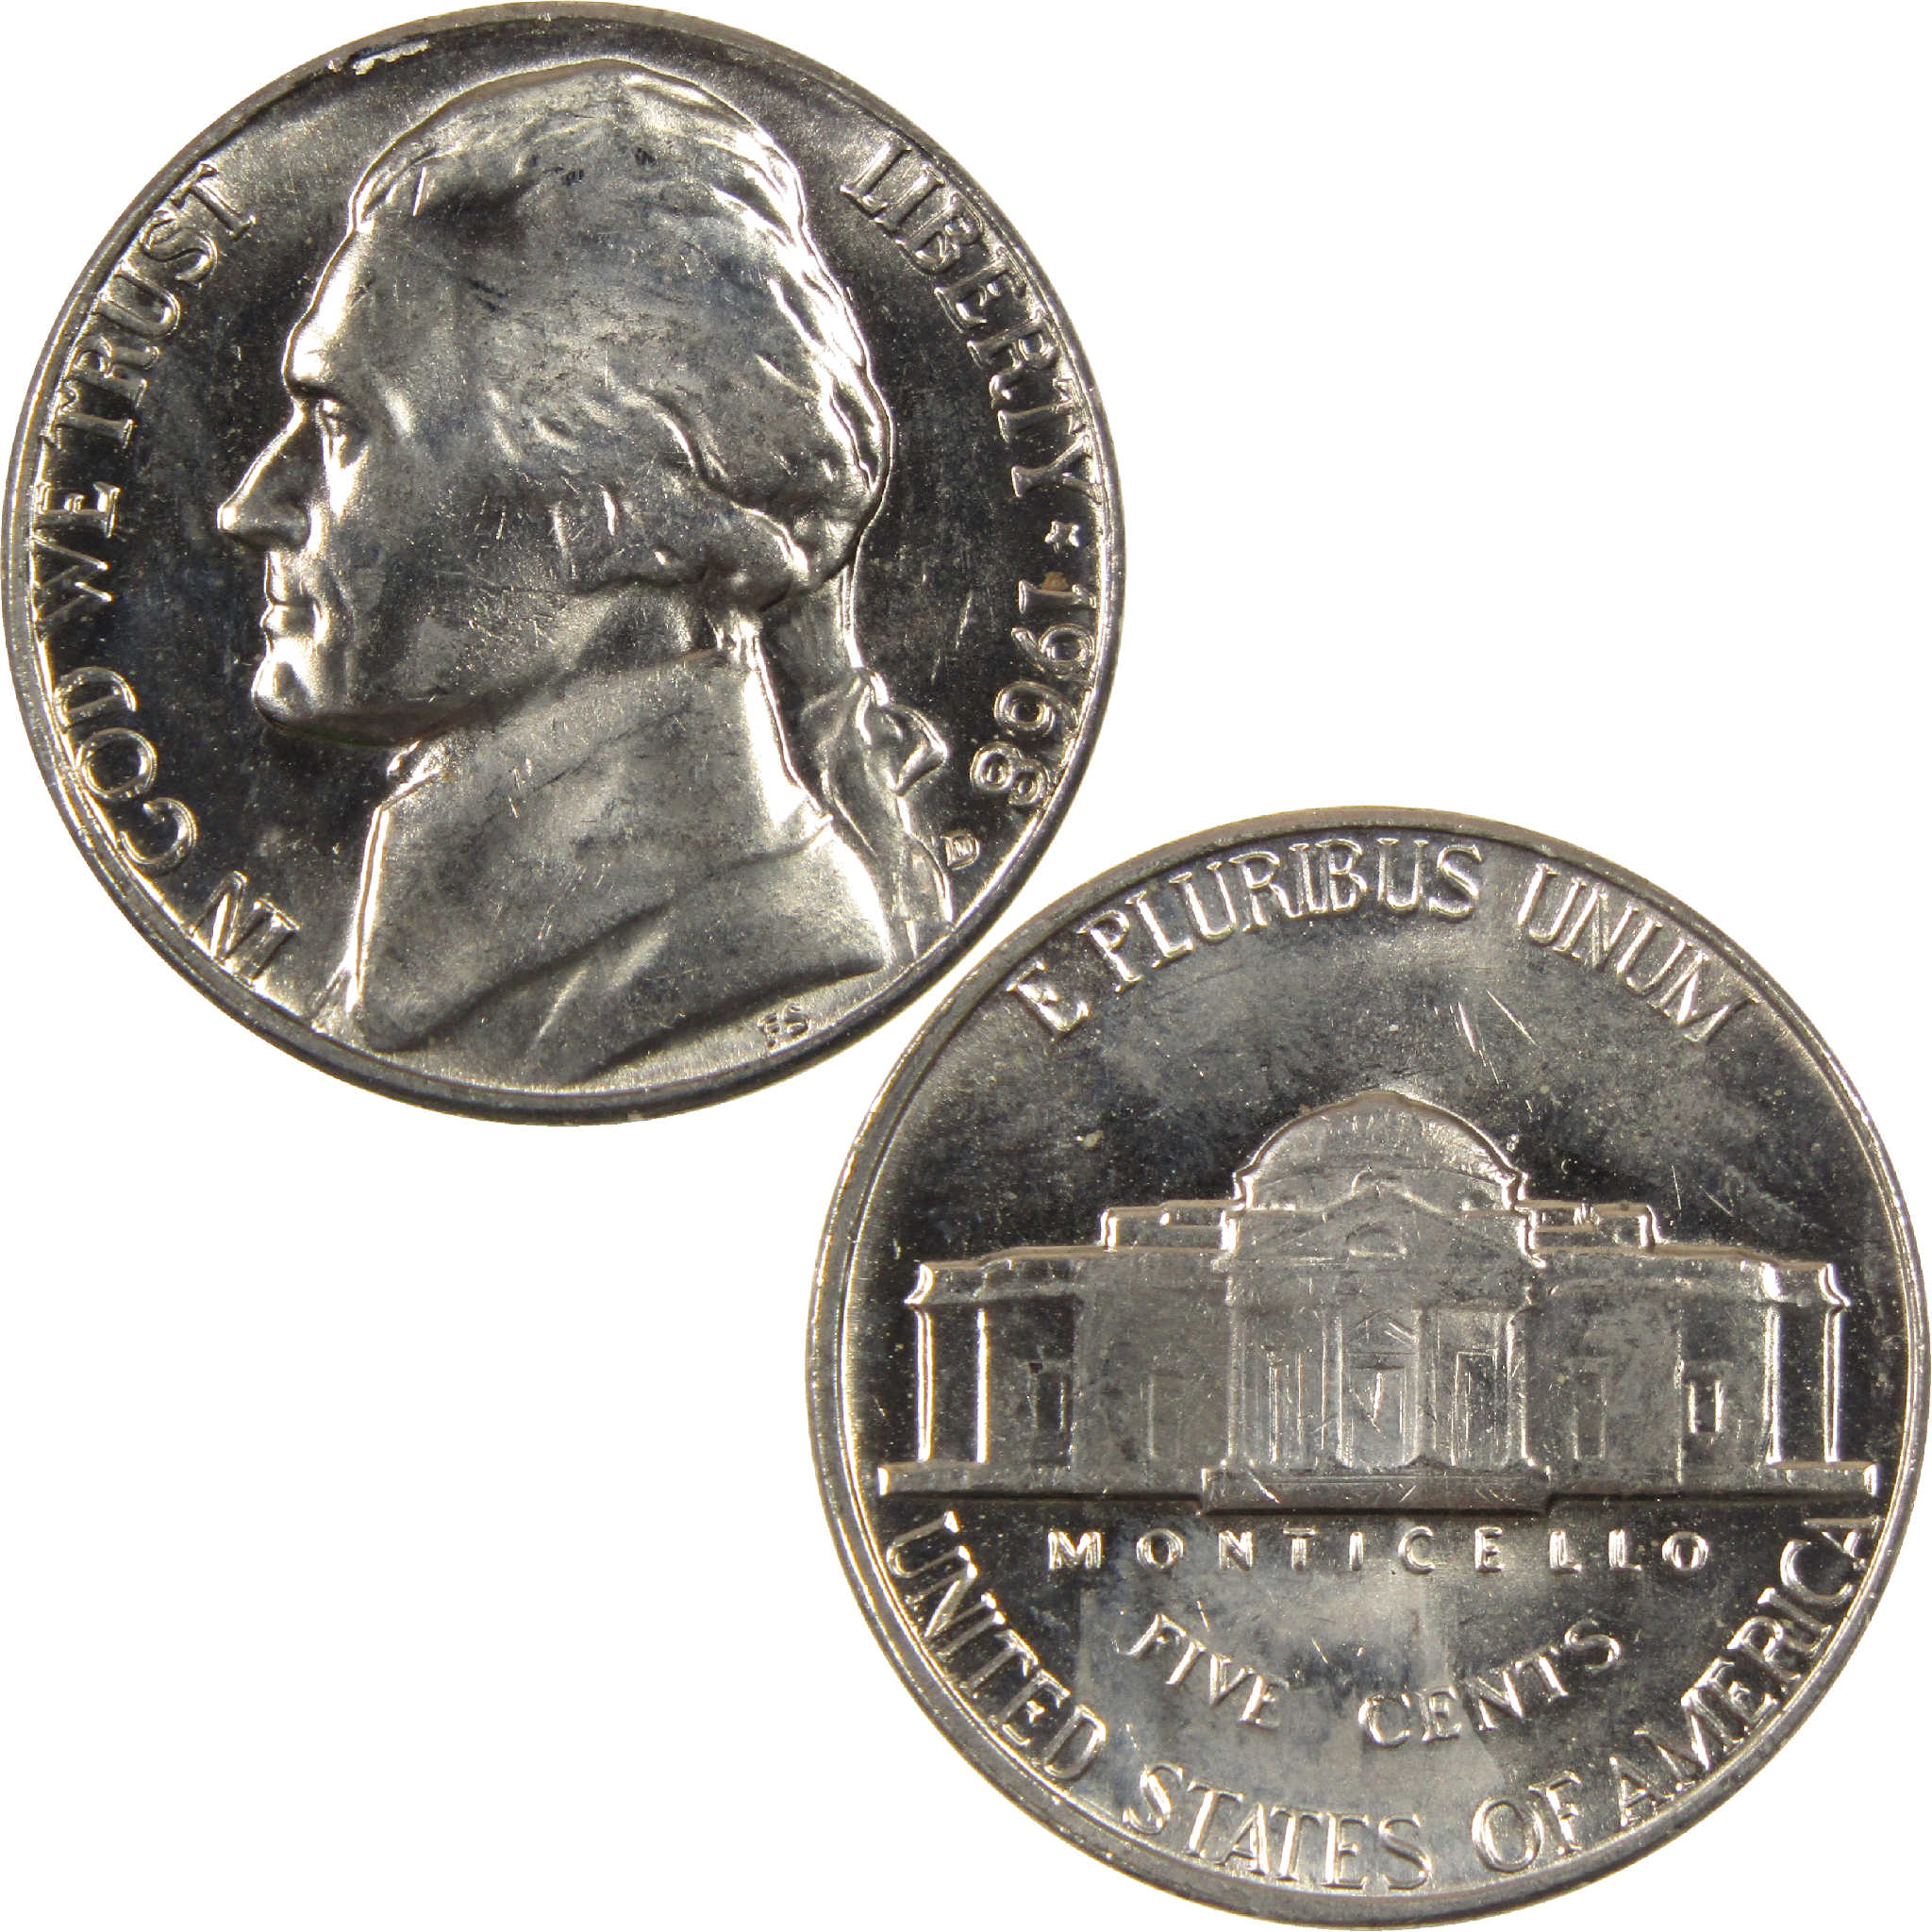 1968 D Jefferson Nickel BU Uncirculated 5c Coin